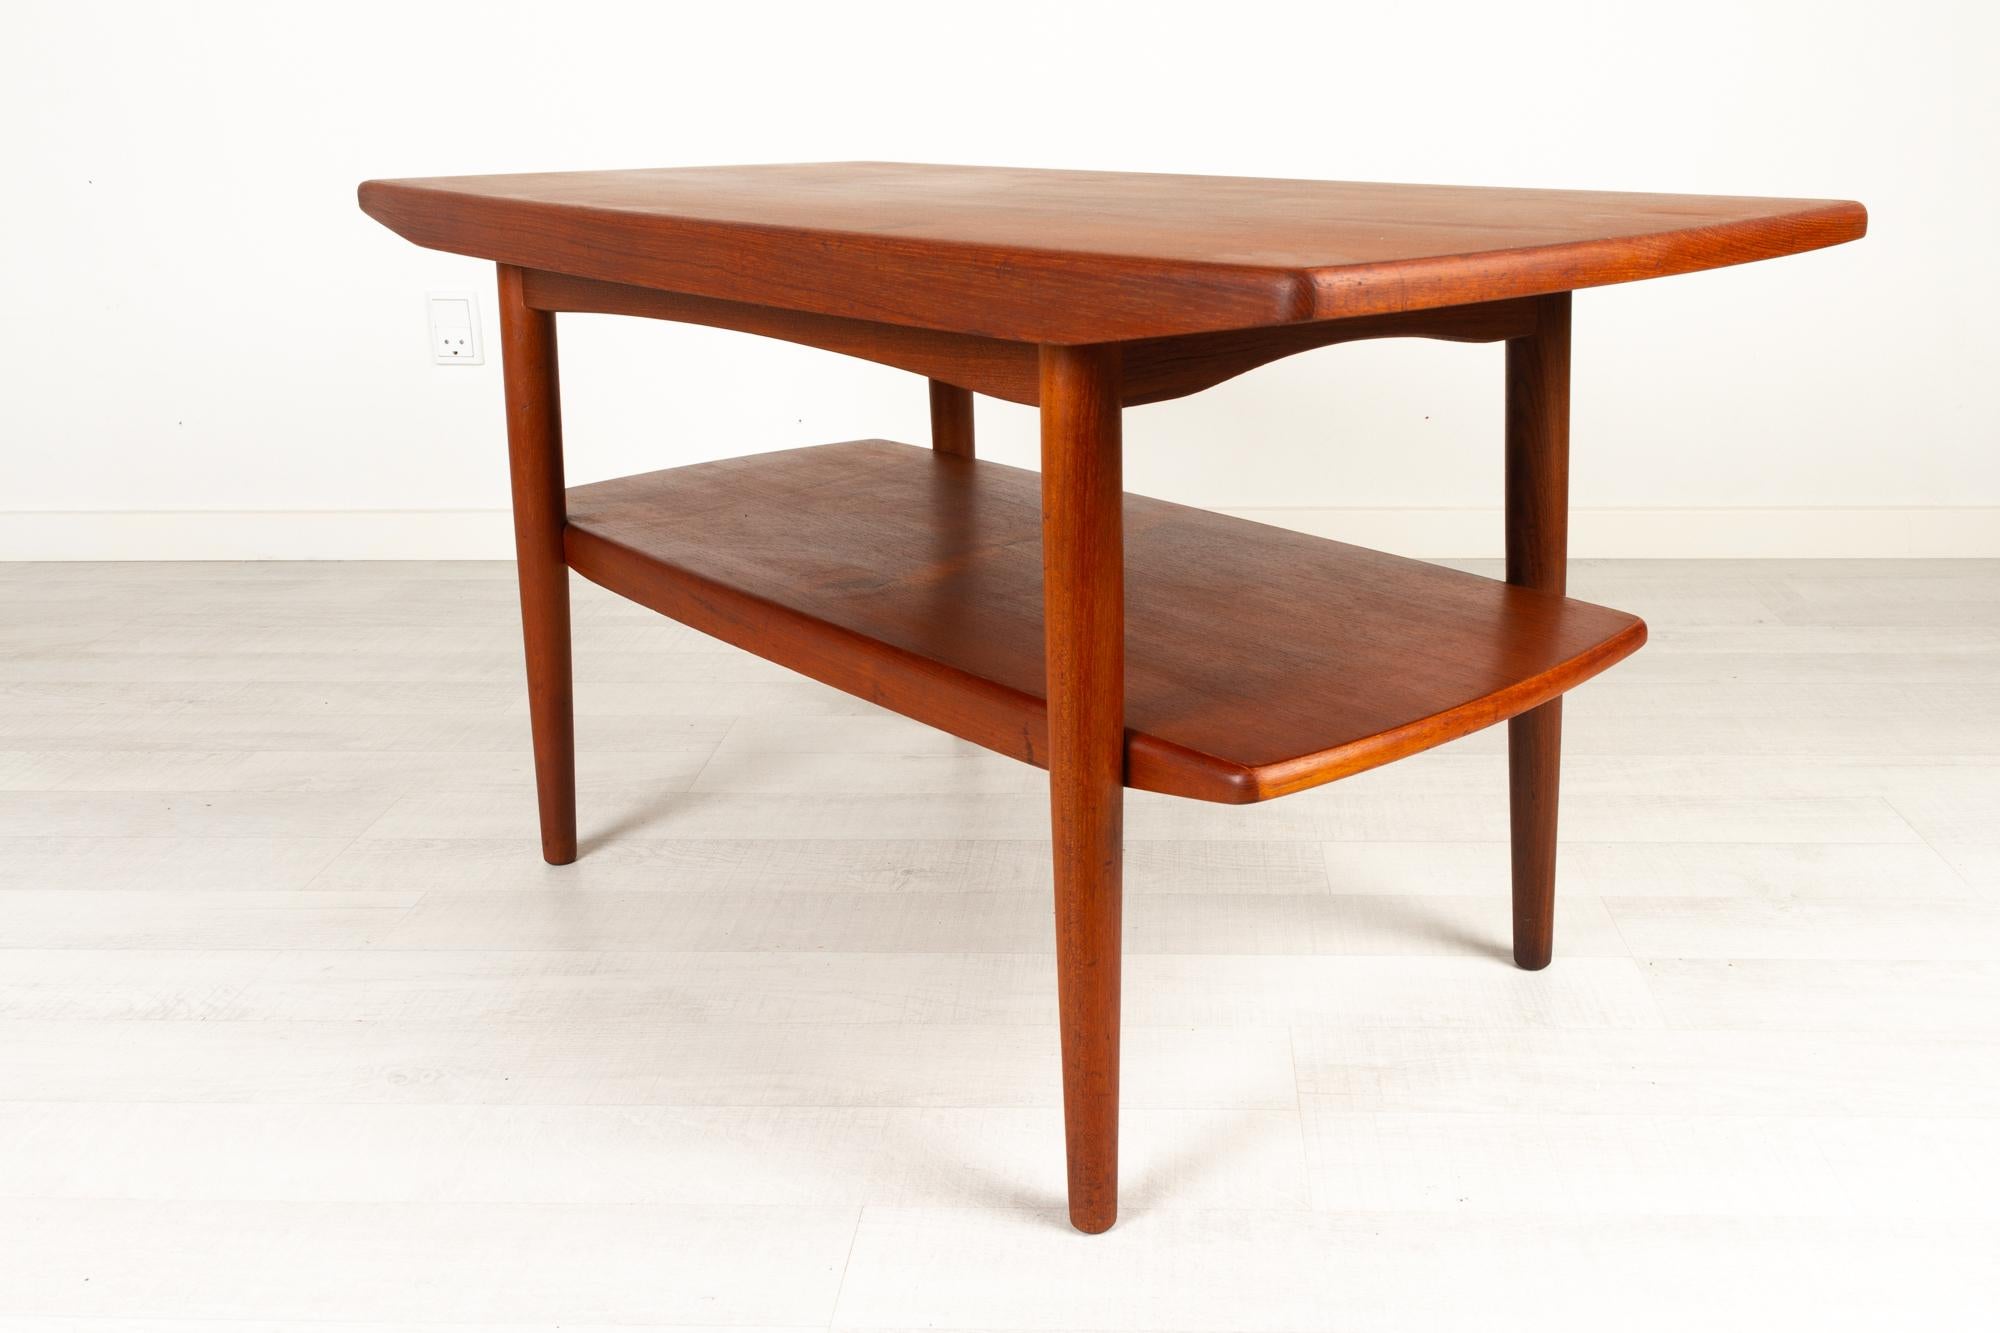 Vintage Danish Teak Coffee Table with Shelf, 1960s For Sale 1